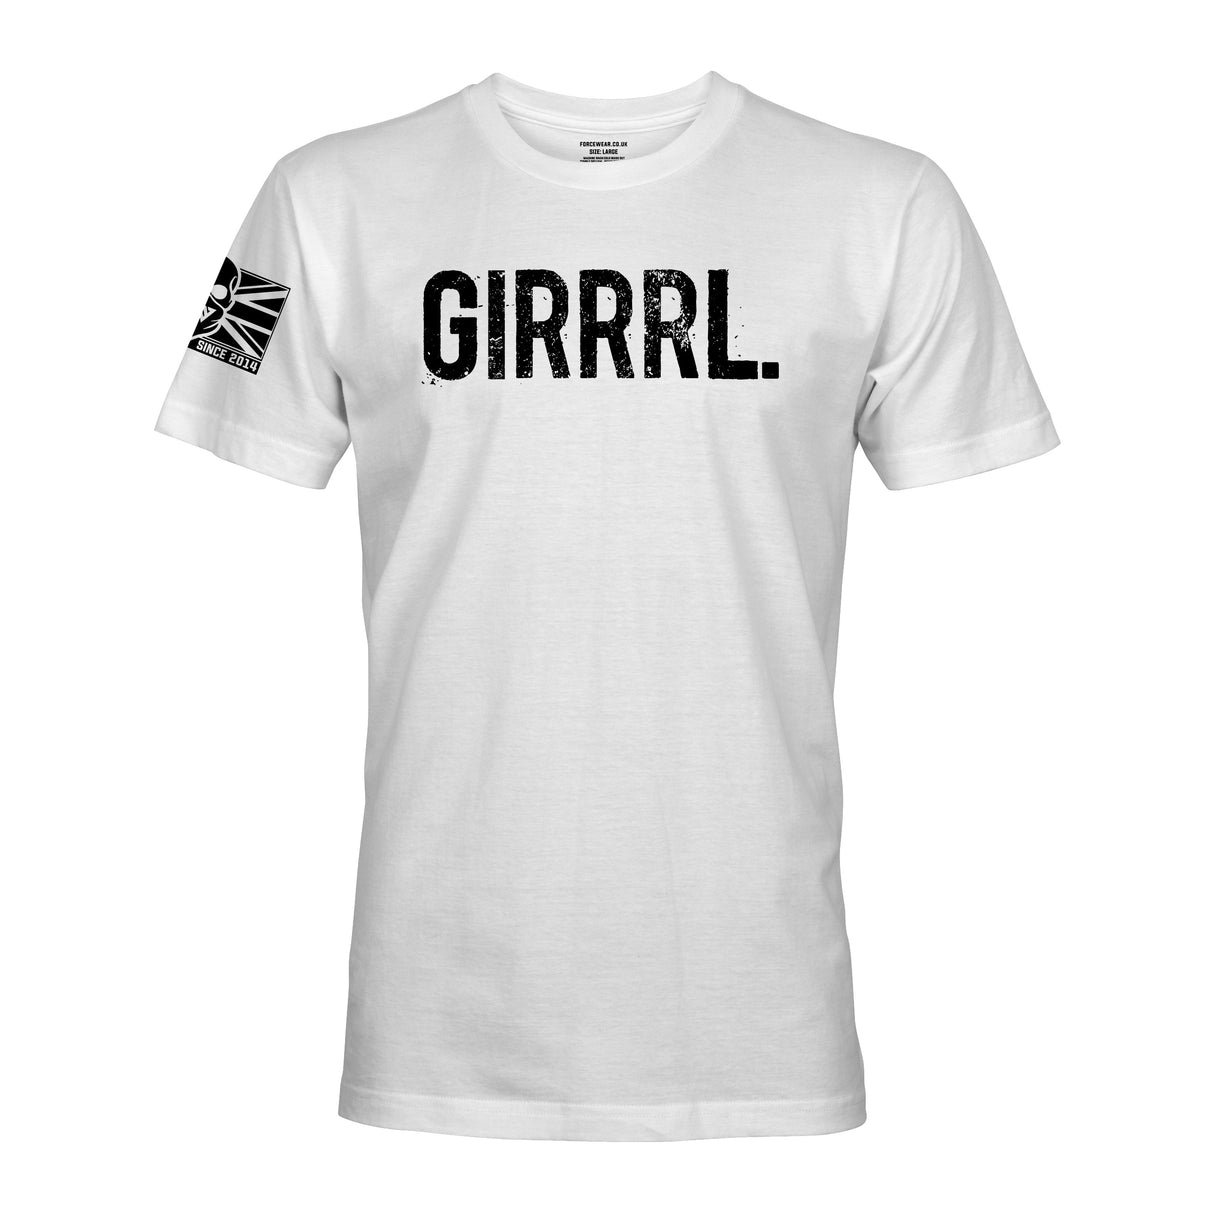 GIRRRL. - Force Wear HQ - T-SHIRTS